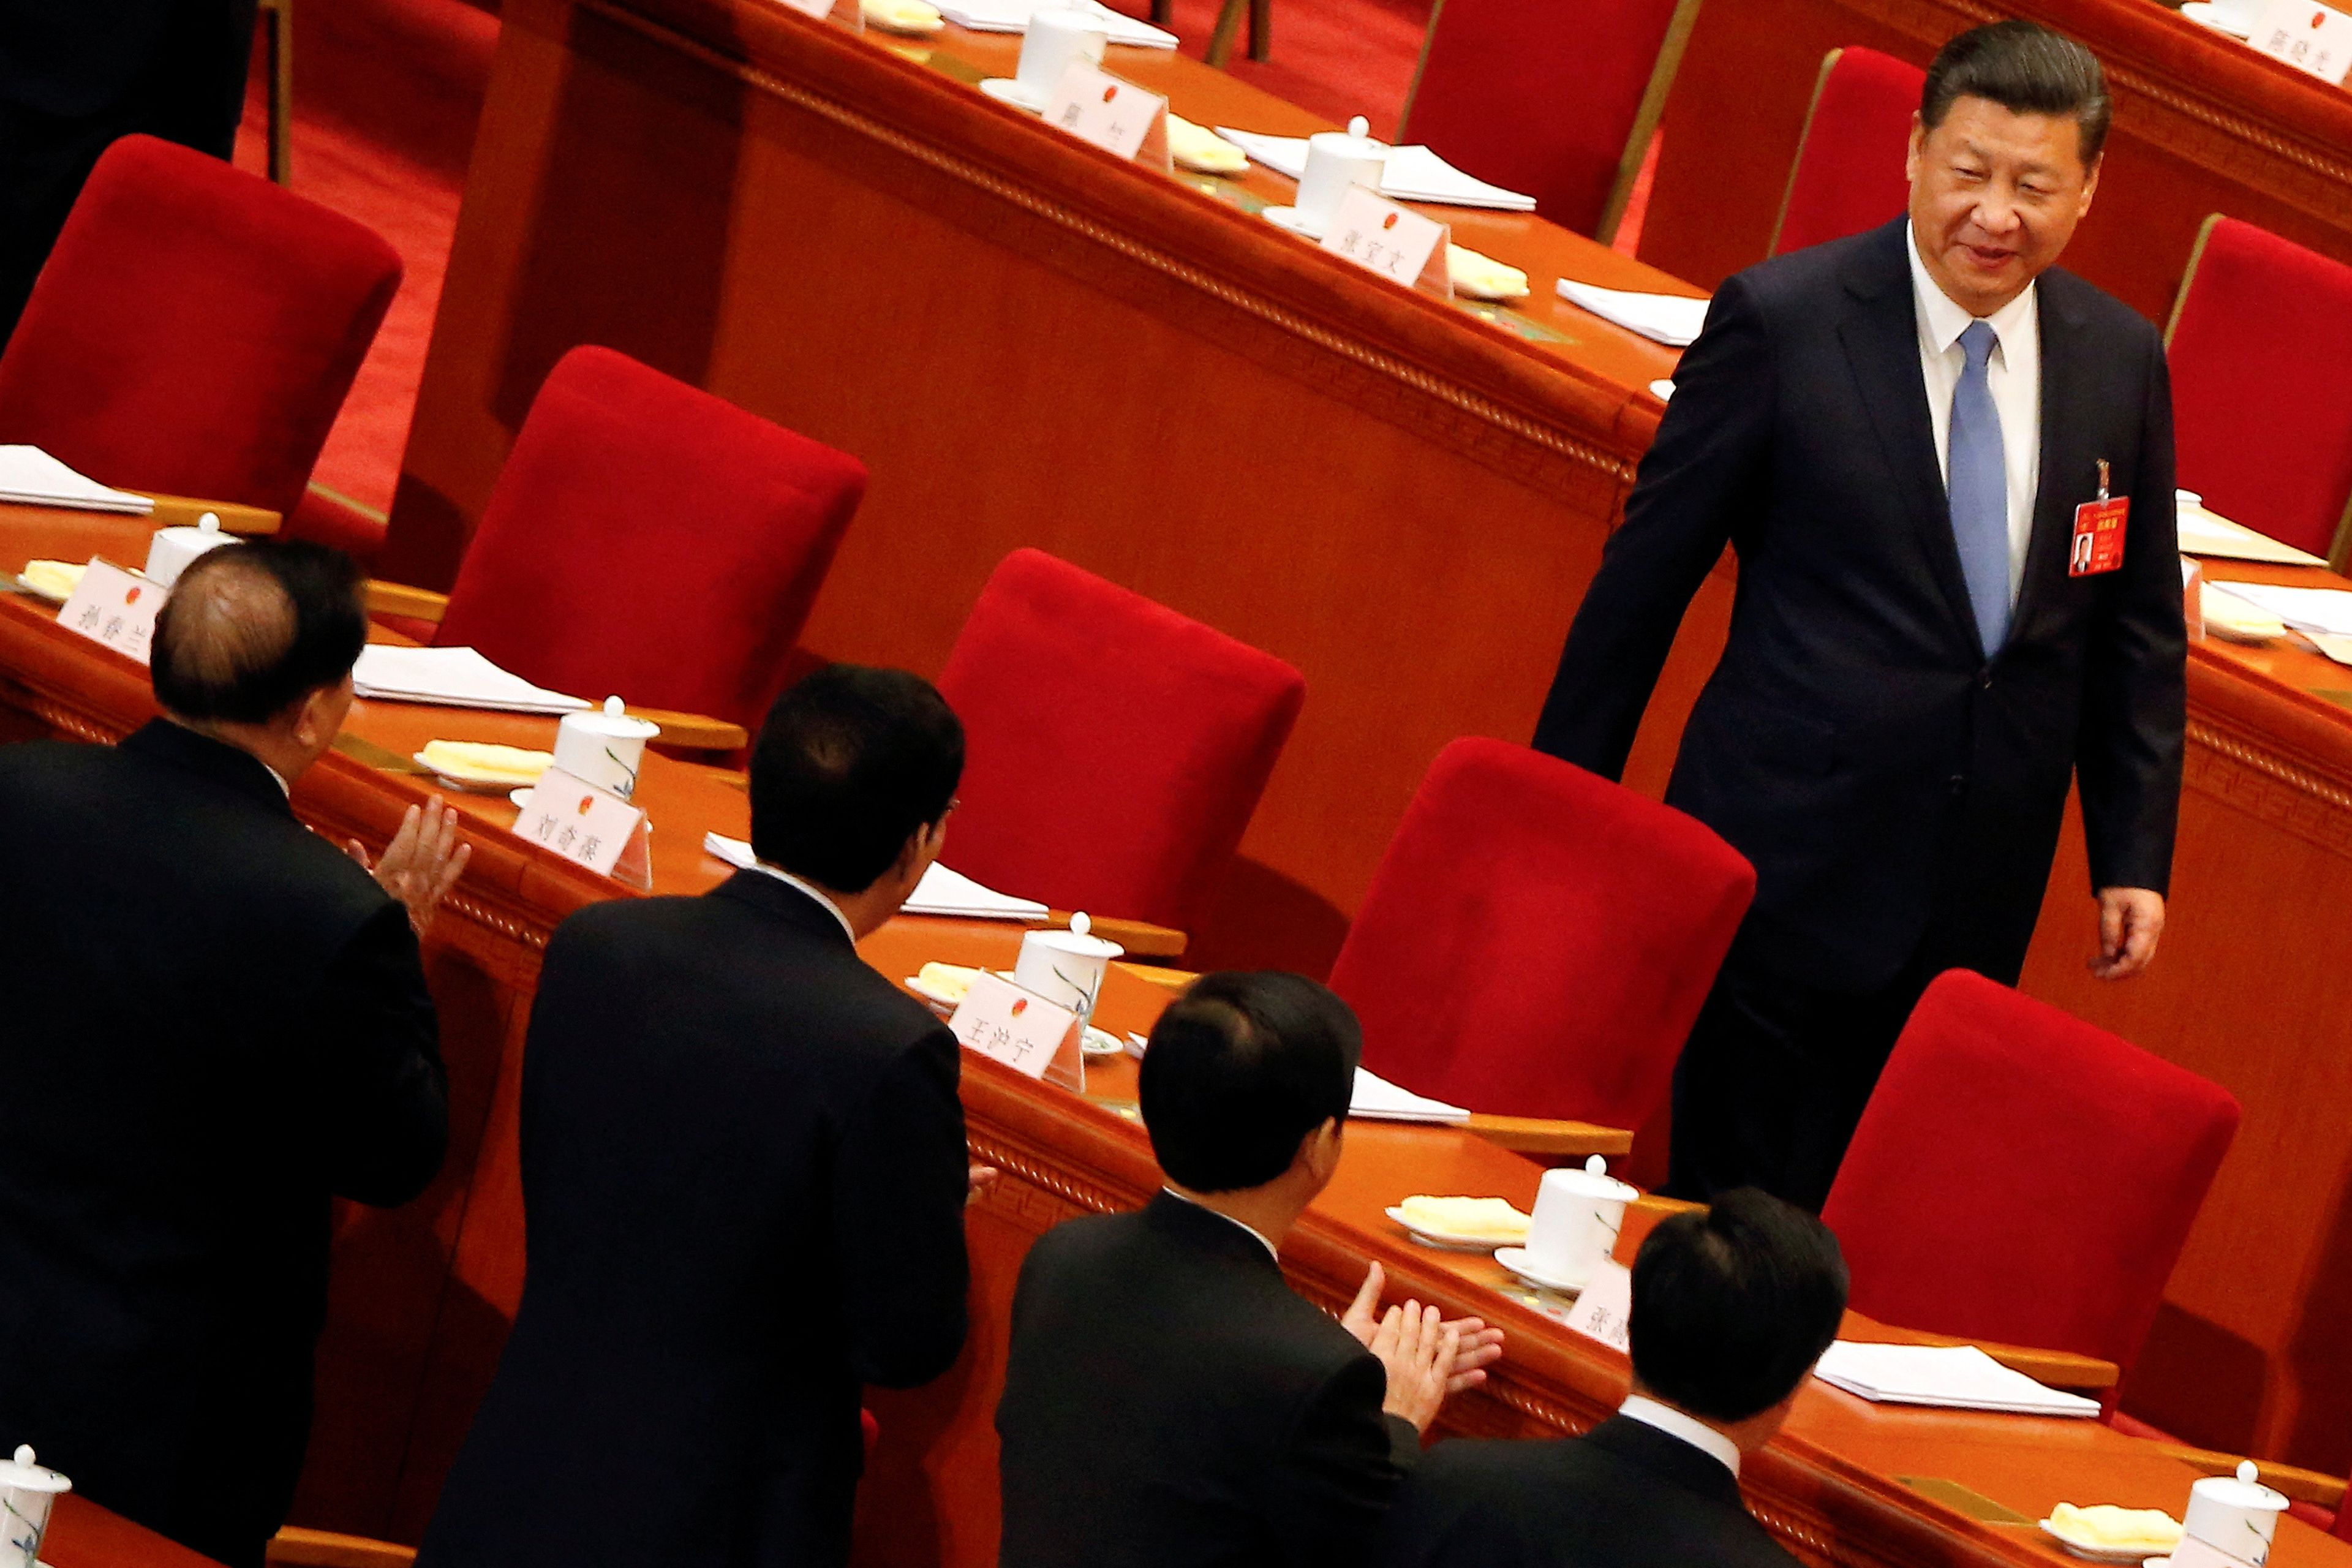 El presidente de China, Xi Jinping, llega a la tercera sesión plenaria de la Asamblea Popular Nacional, en Pekín (China), en marzo de 2017.